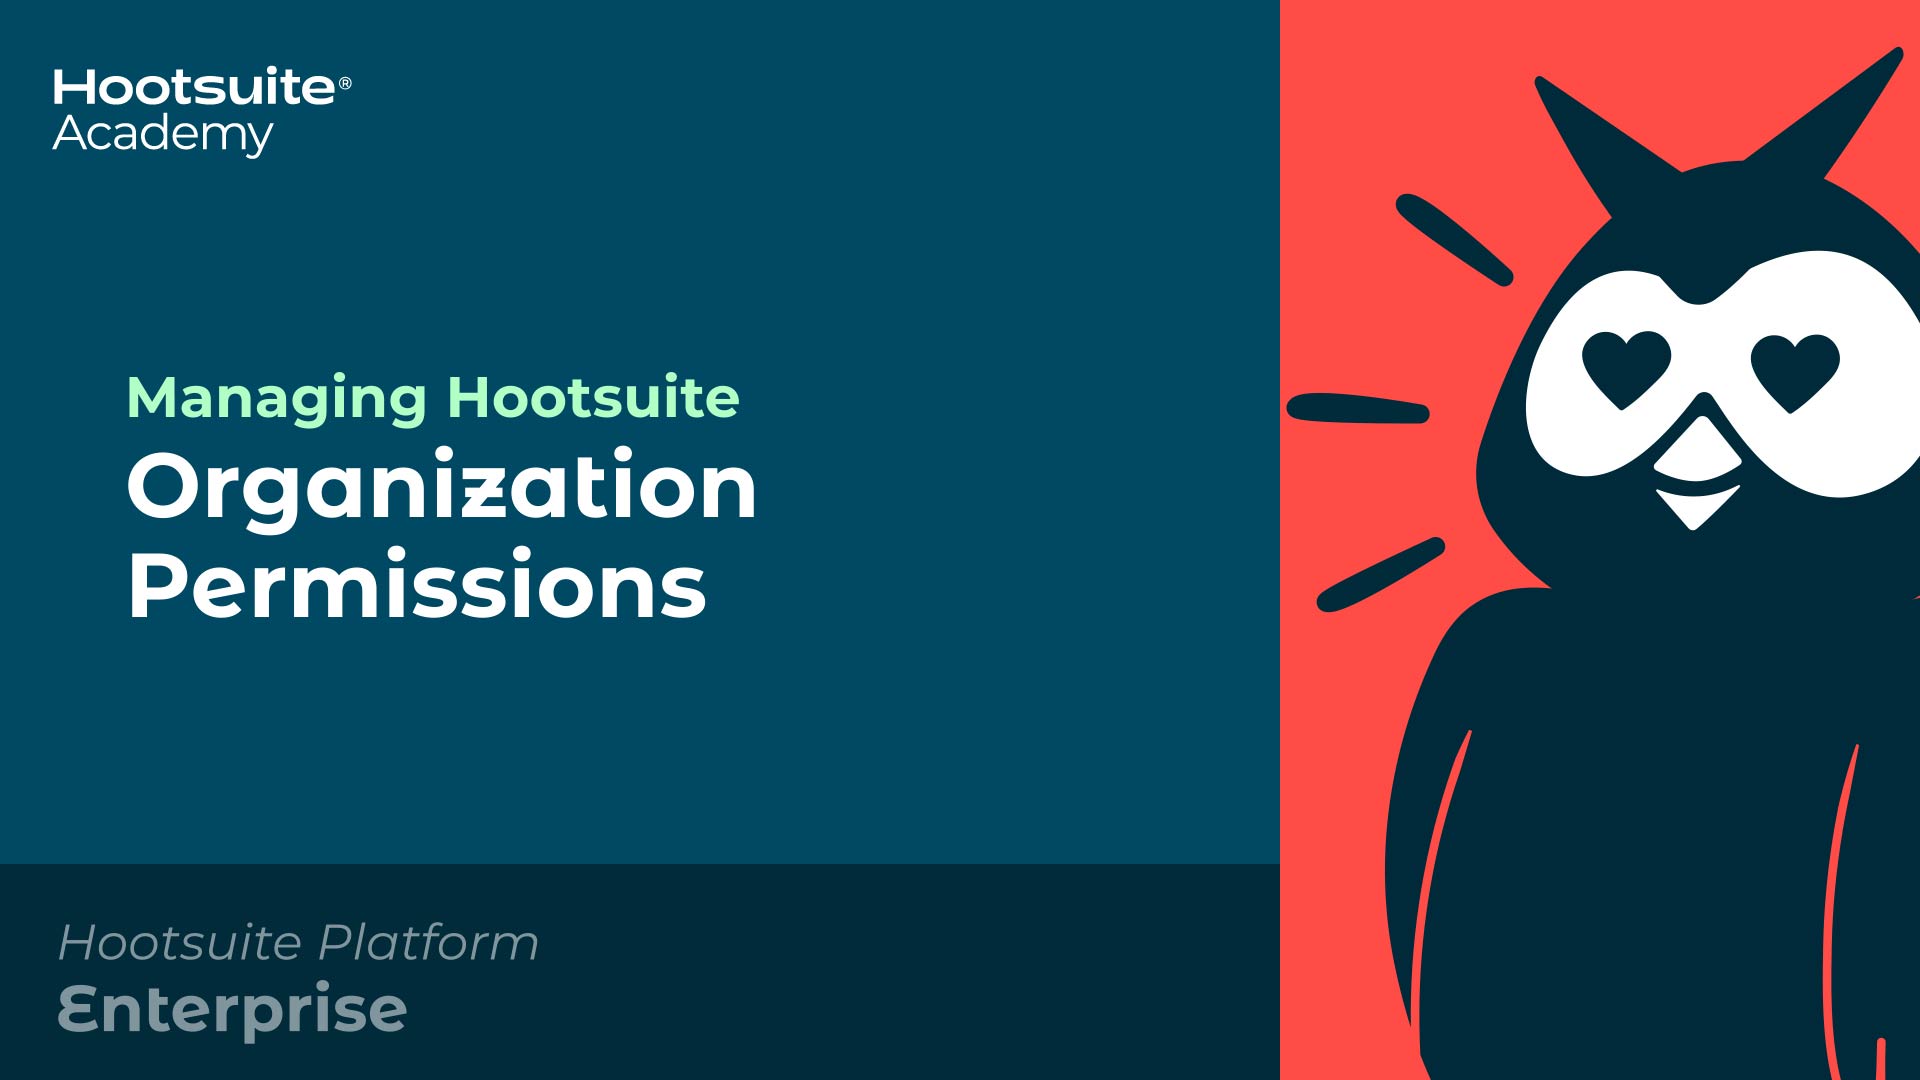 Managing Hootsuite organization permissions video.